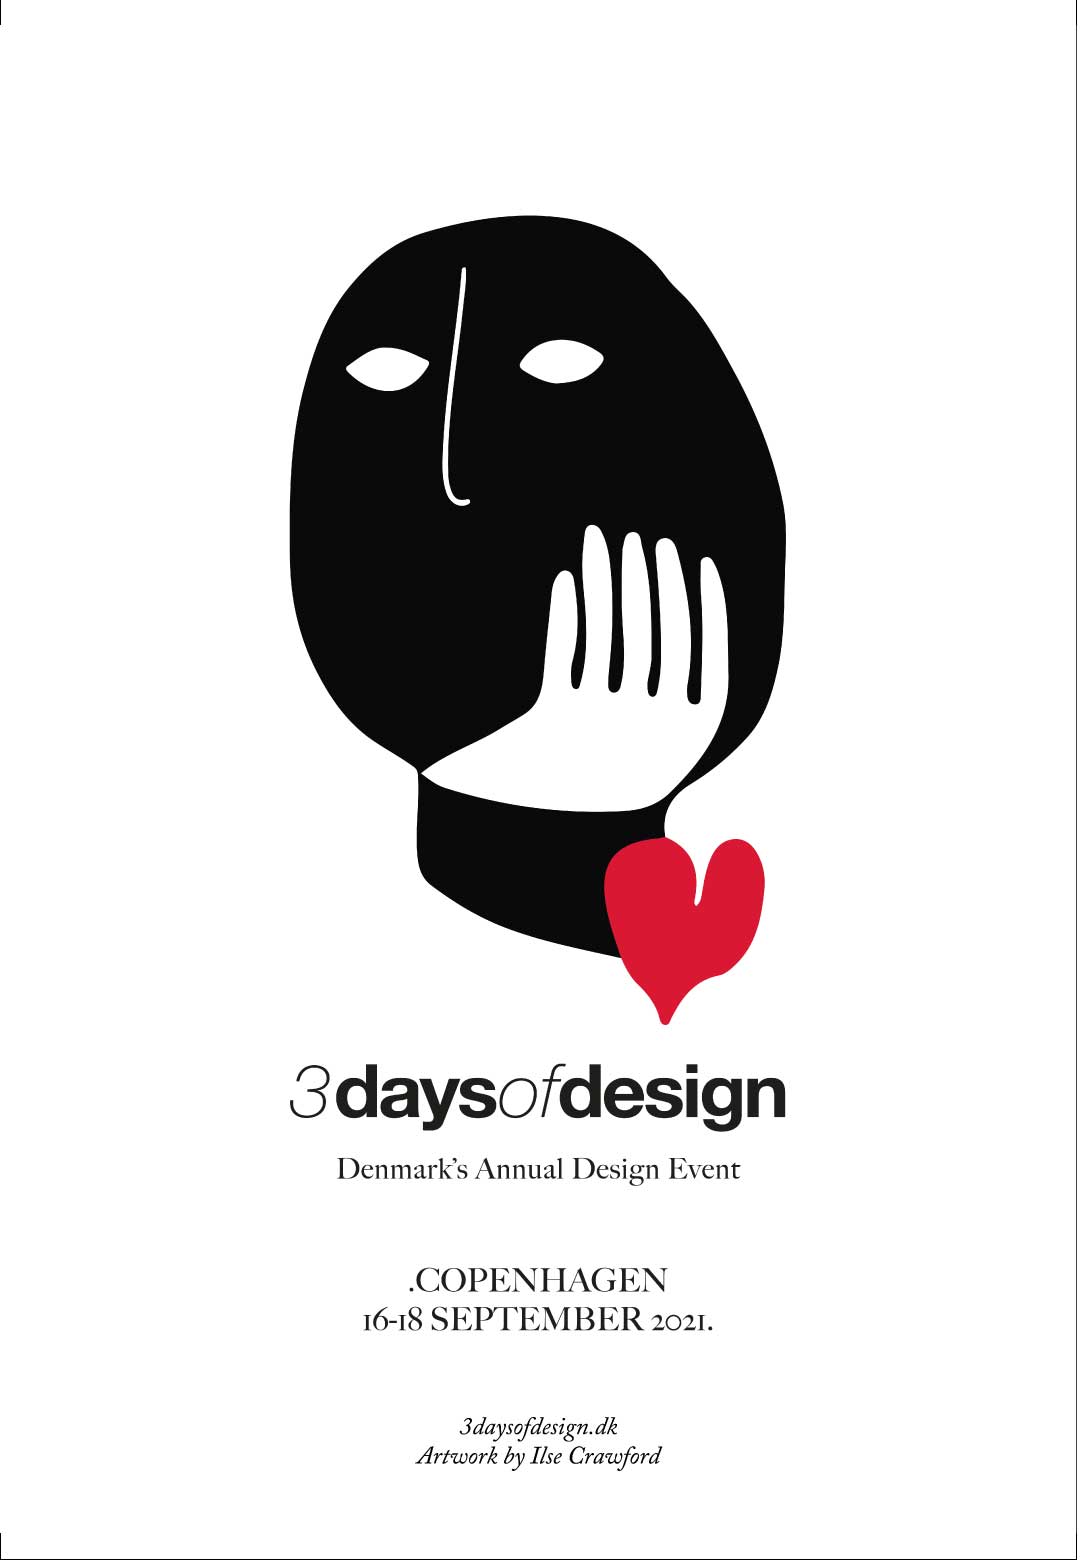 Copenhagen pays tribute to the healing power of good design at 3daysofdesign